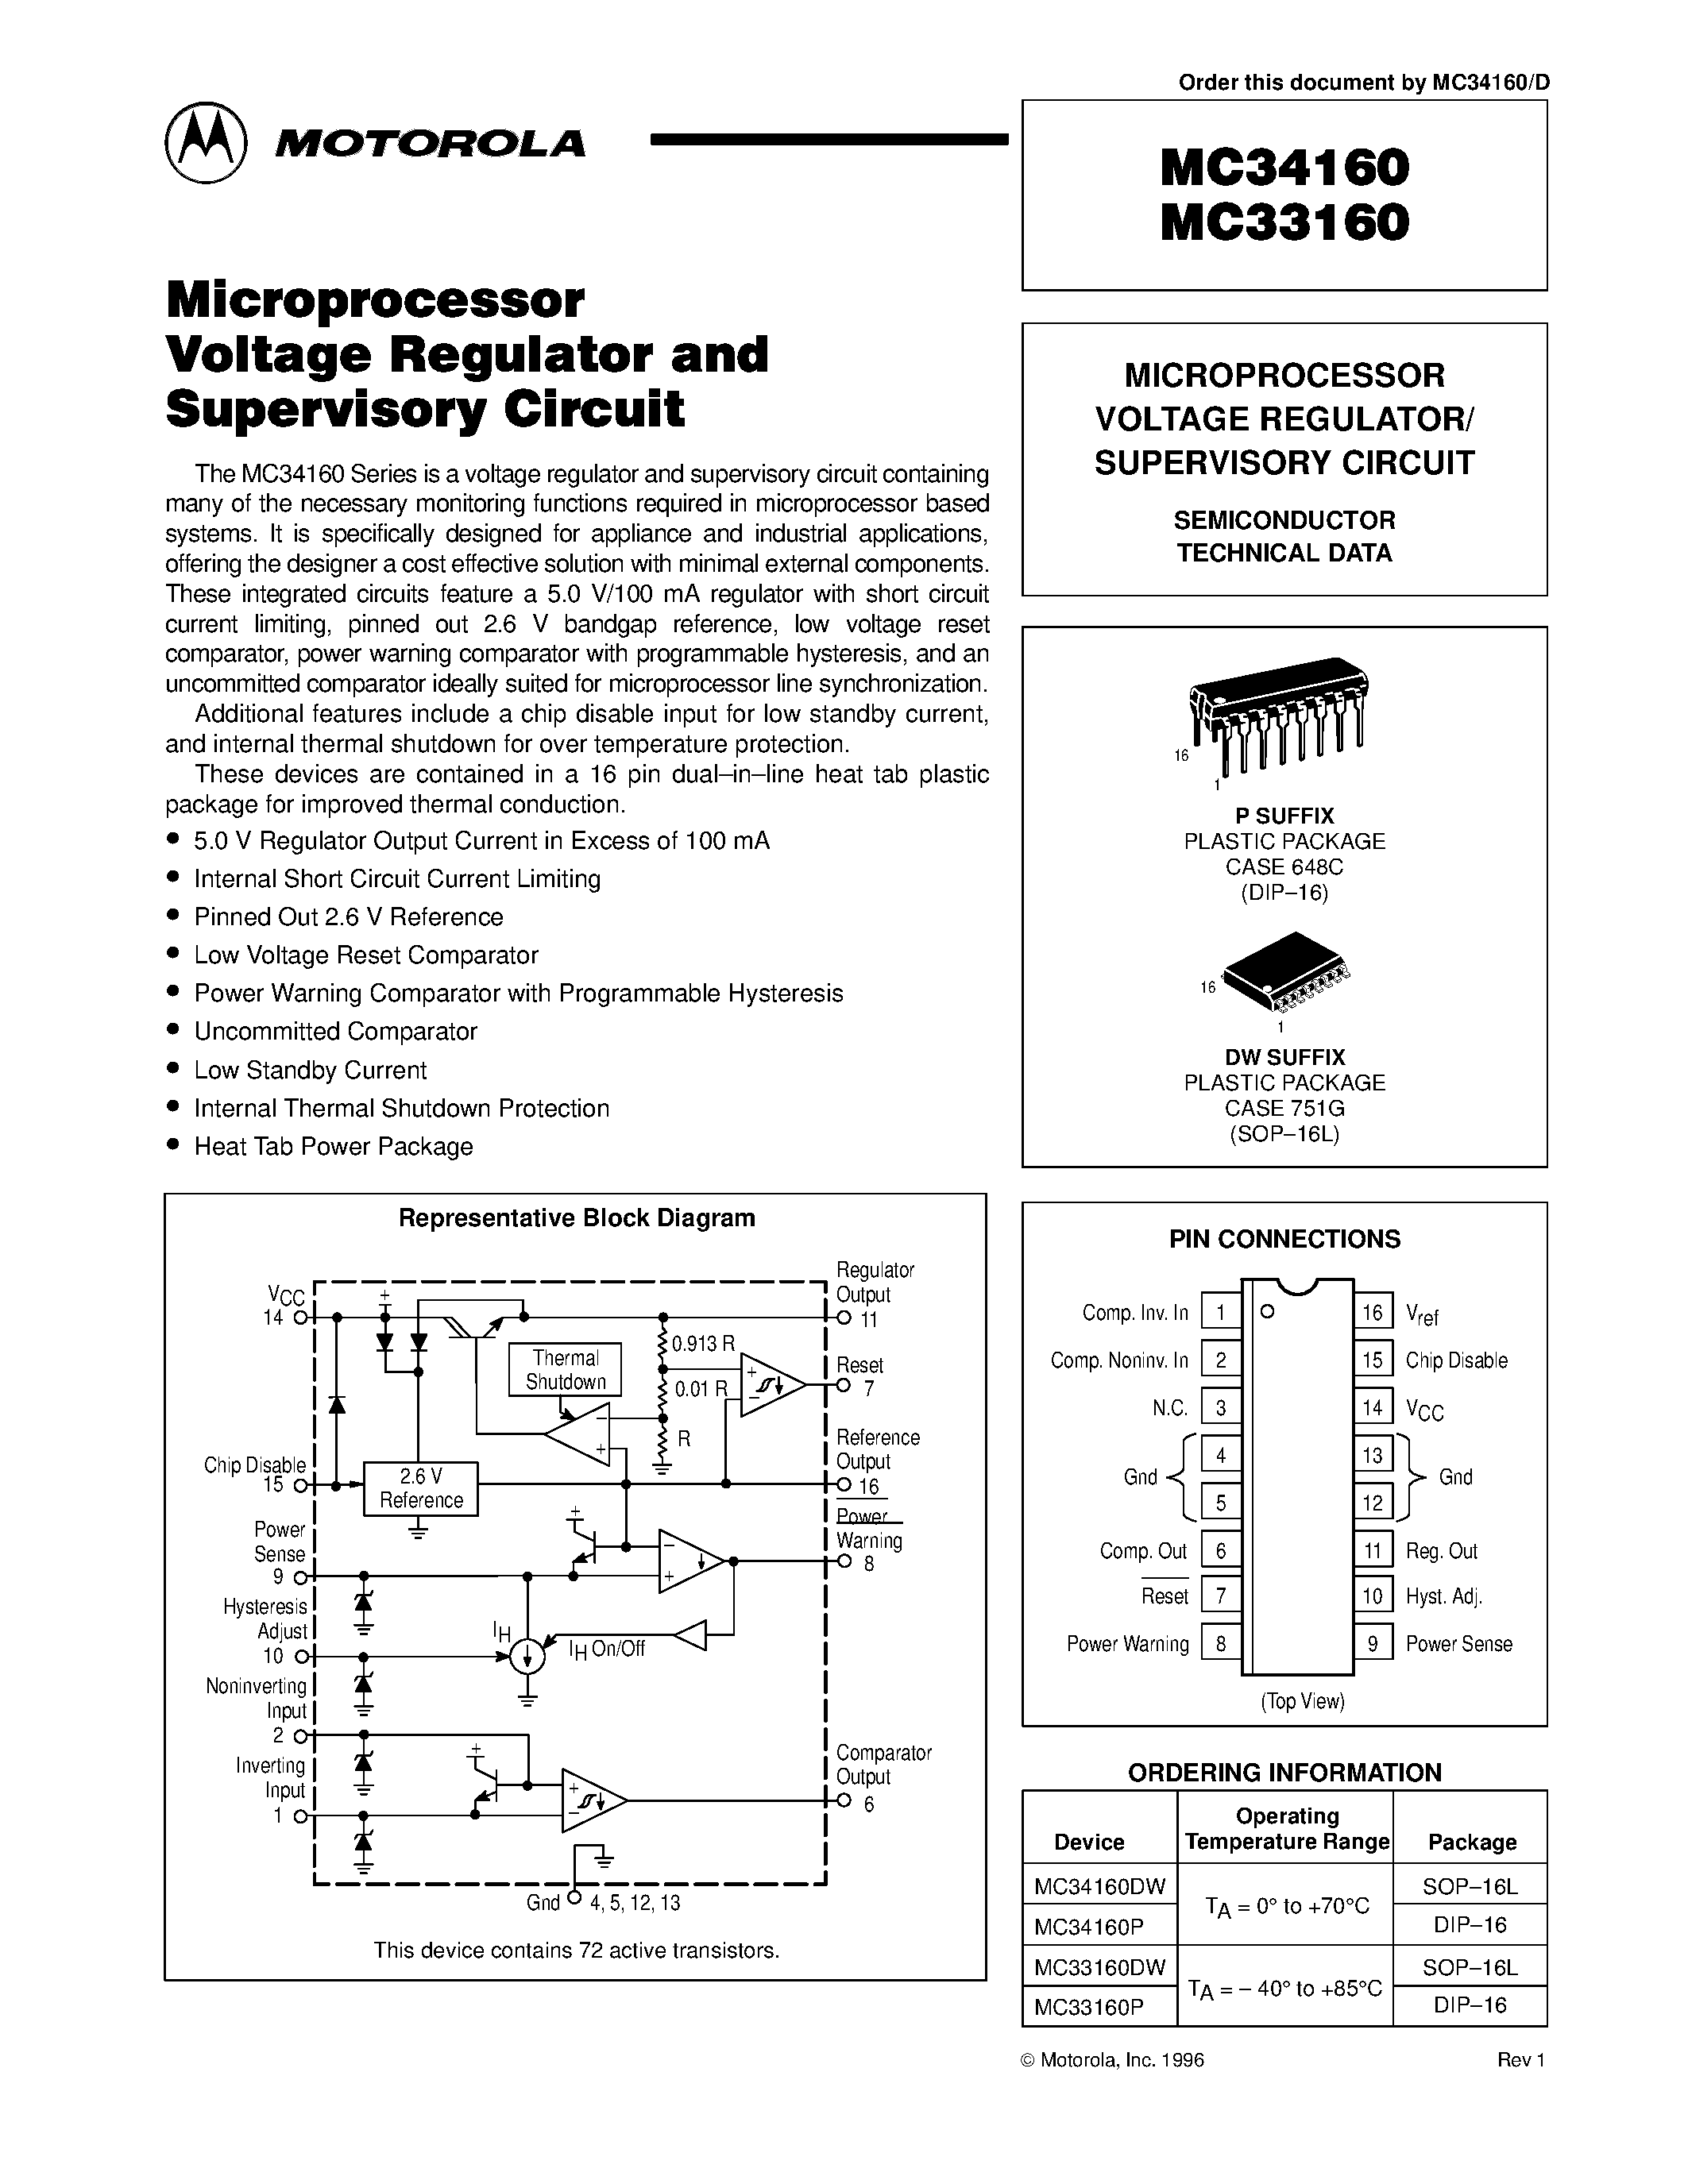 Datasheet MC33160 - MICROPROCESSOR VOLTAGE REGULATOR/ SUPERVISORY CIRCUIT page 1